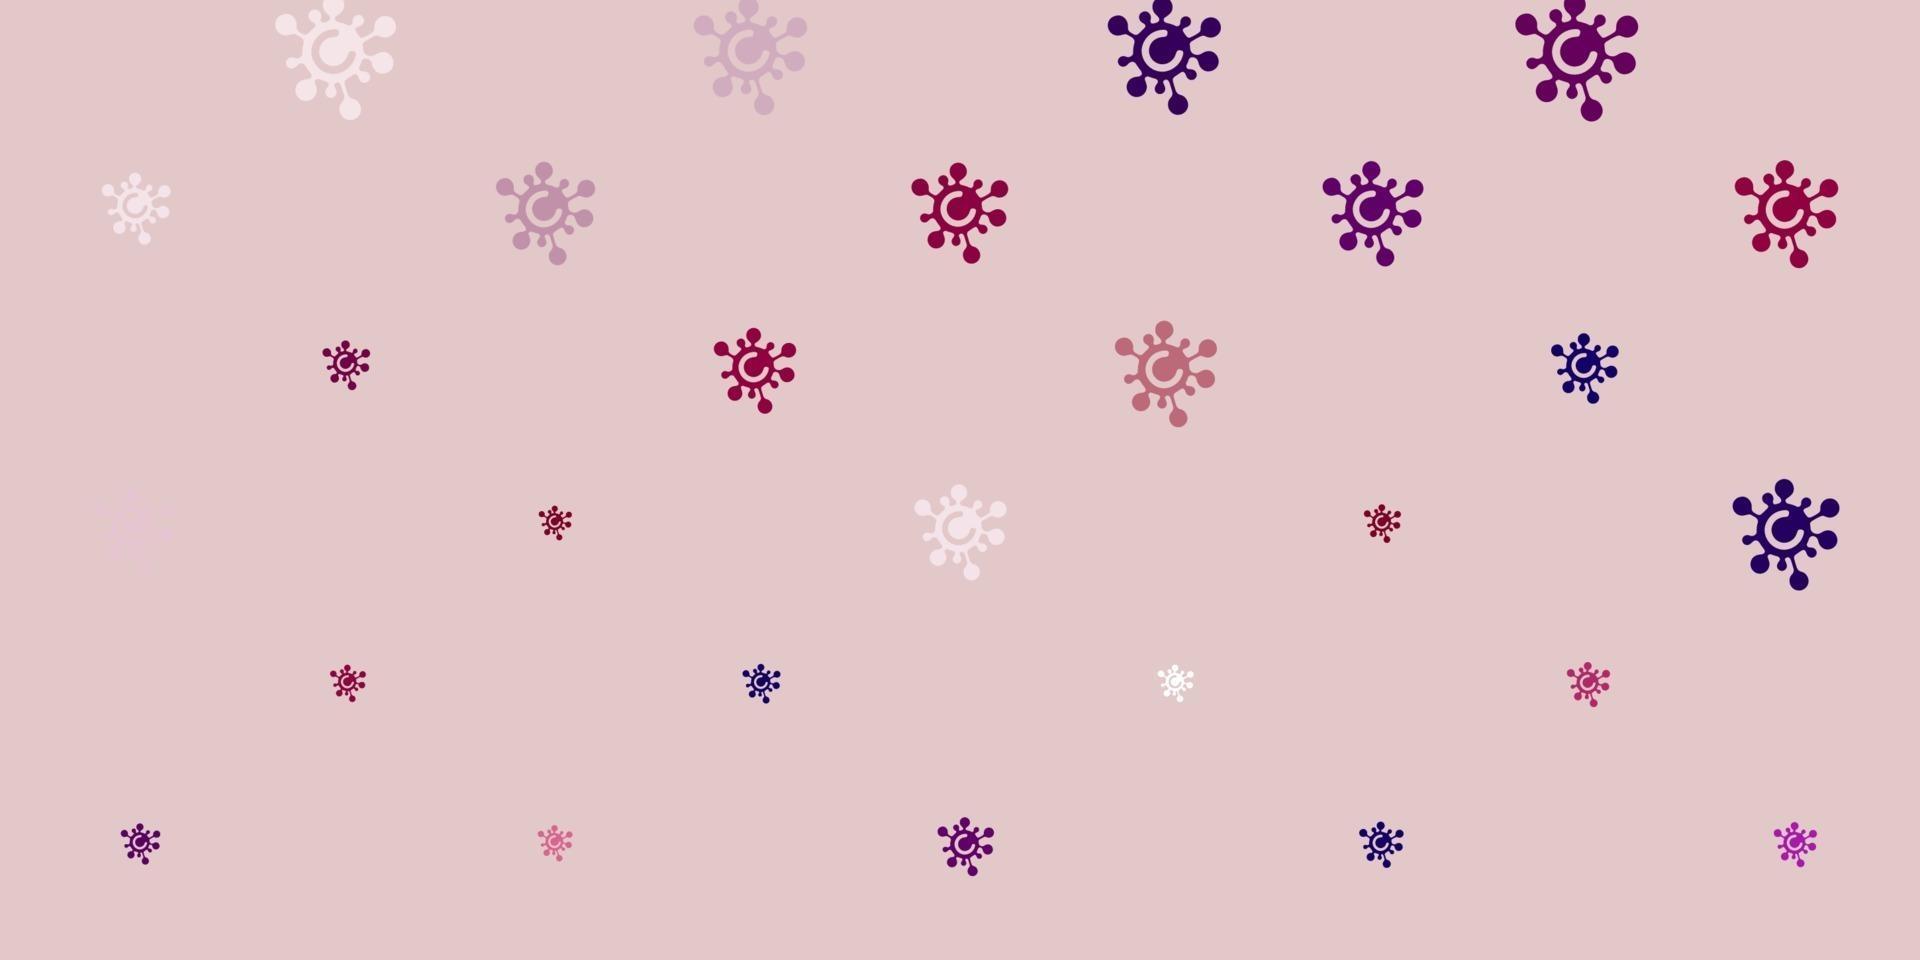 textura de vector rosa claro con símbolos de enfermedades.